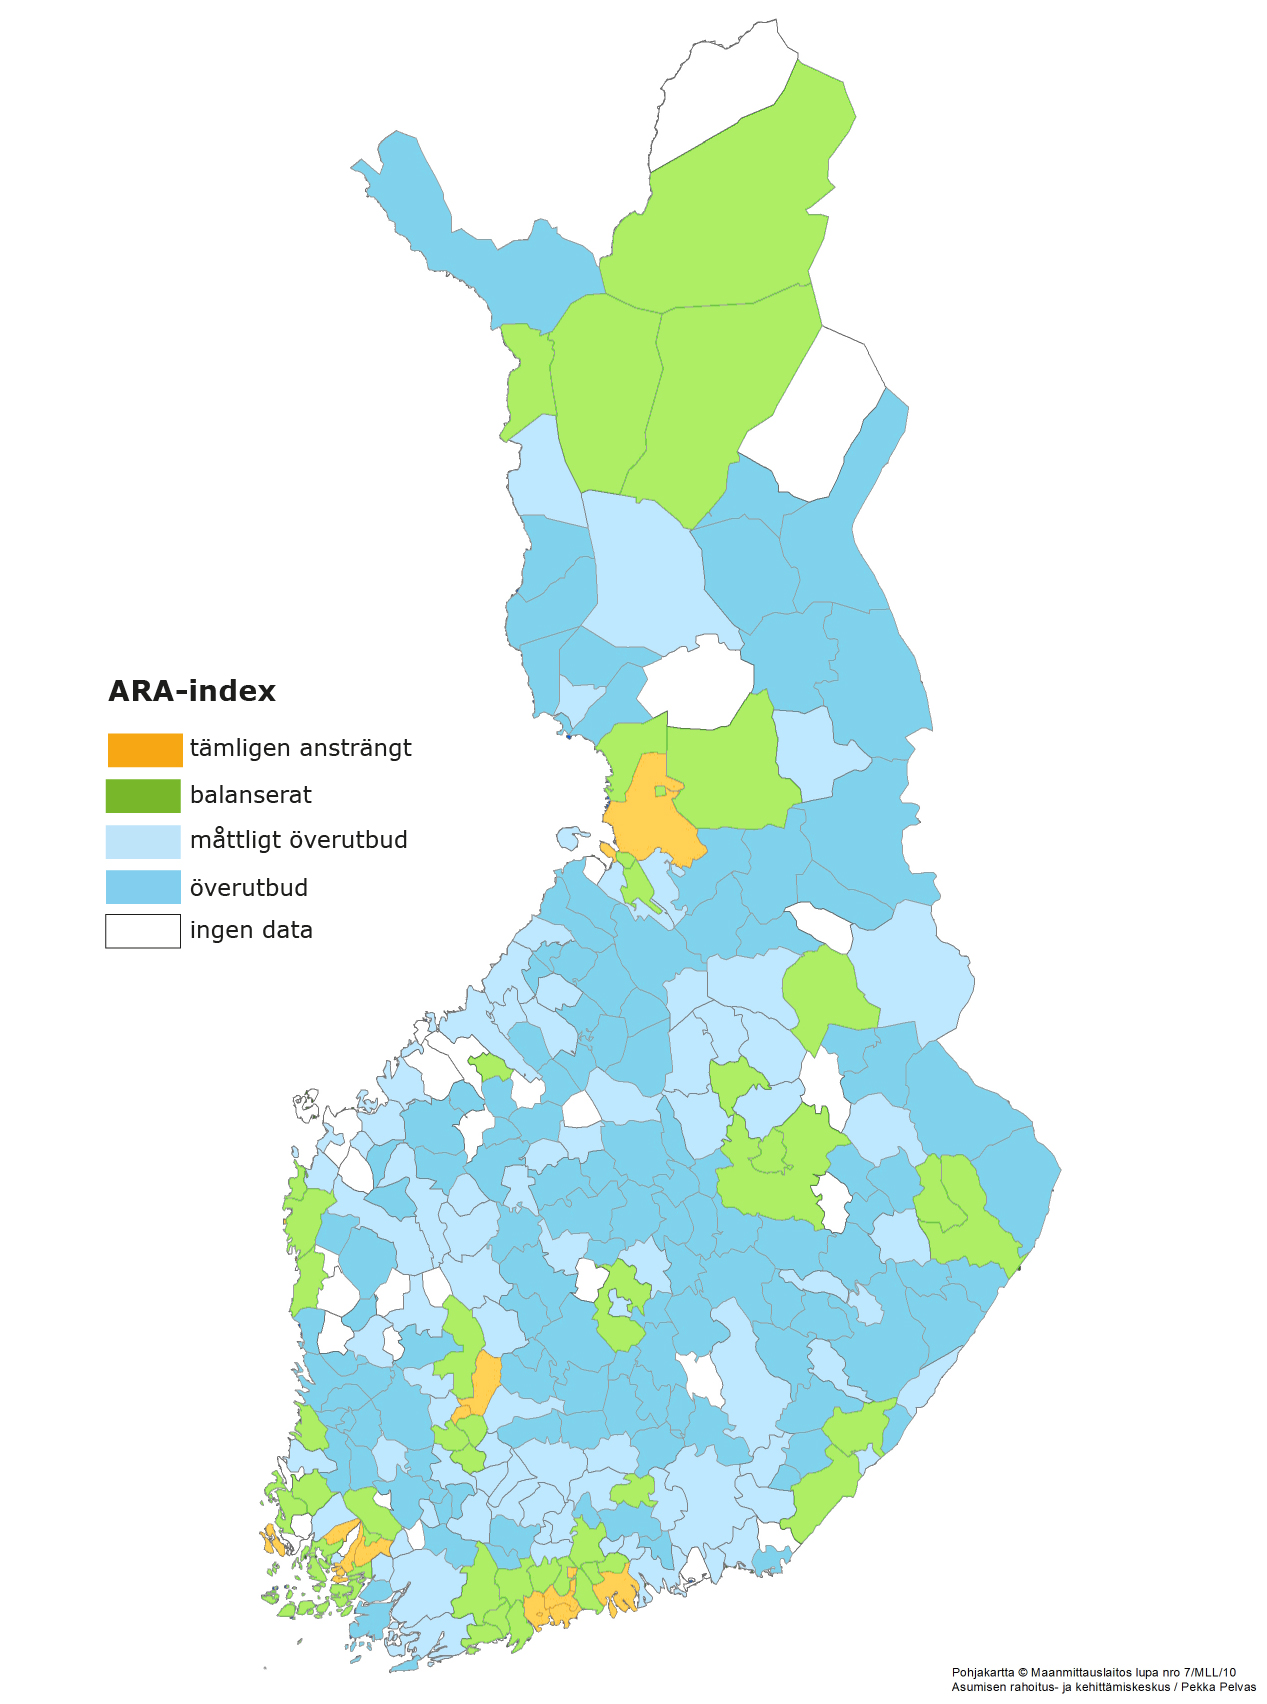 Kartan om kommunernas ARA-index 2020.